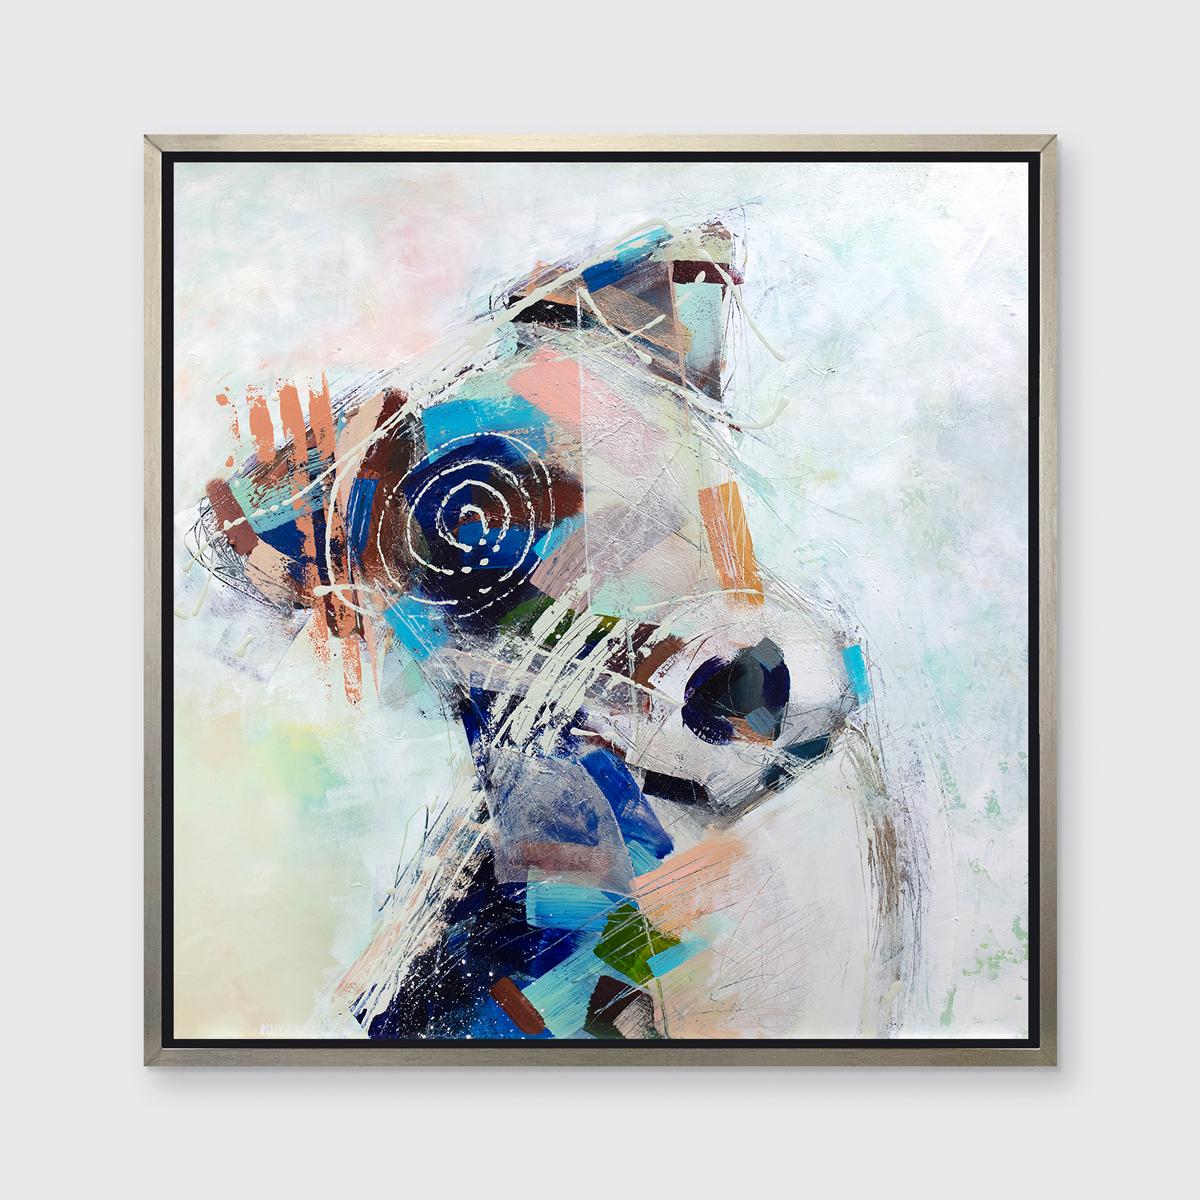 Abstract Print Russell Miyaki - "Course Dog" Impression giclée en édition limitée, 30" x 30"